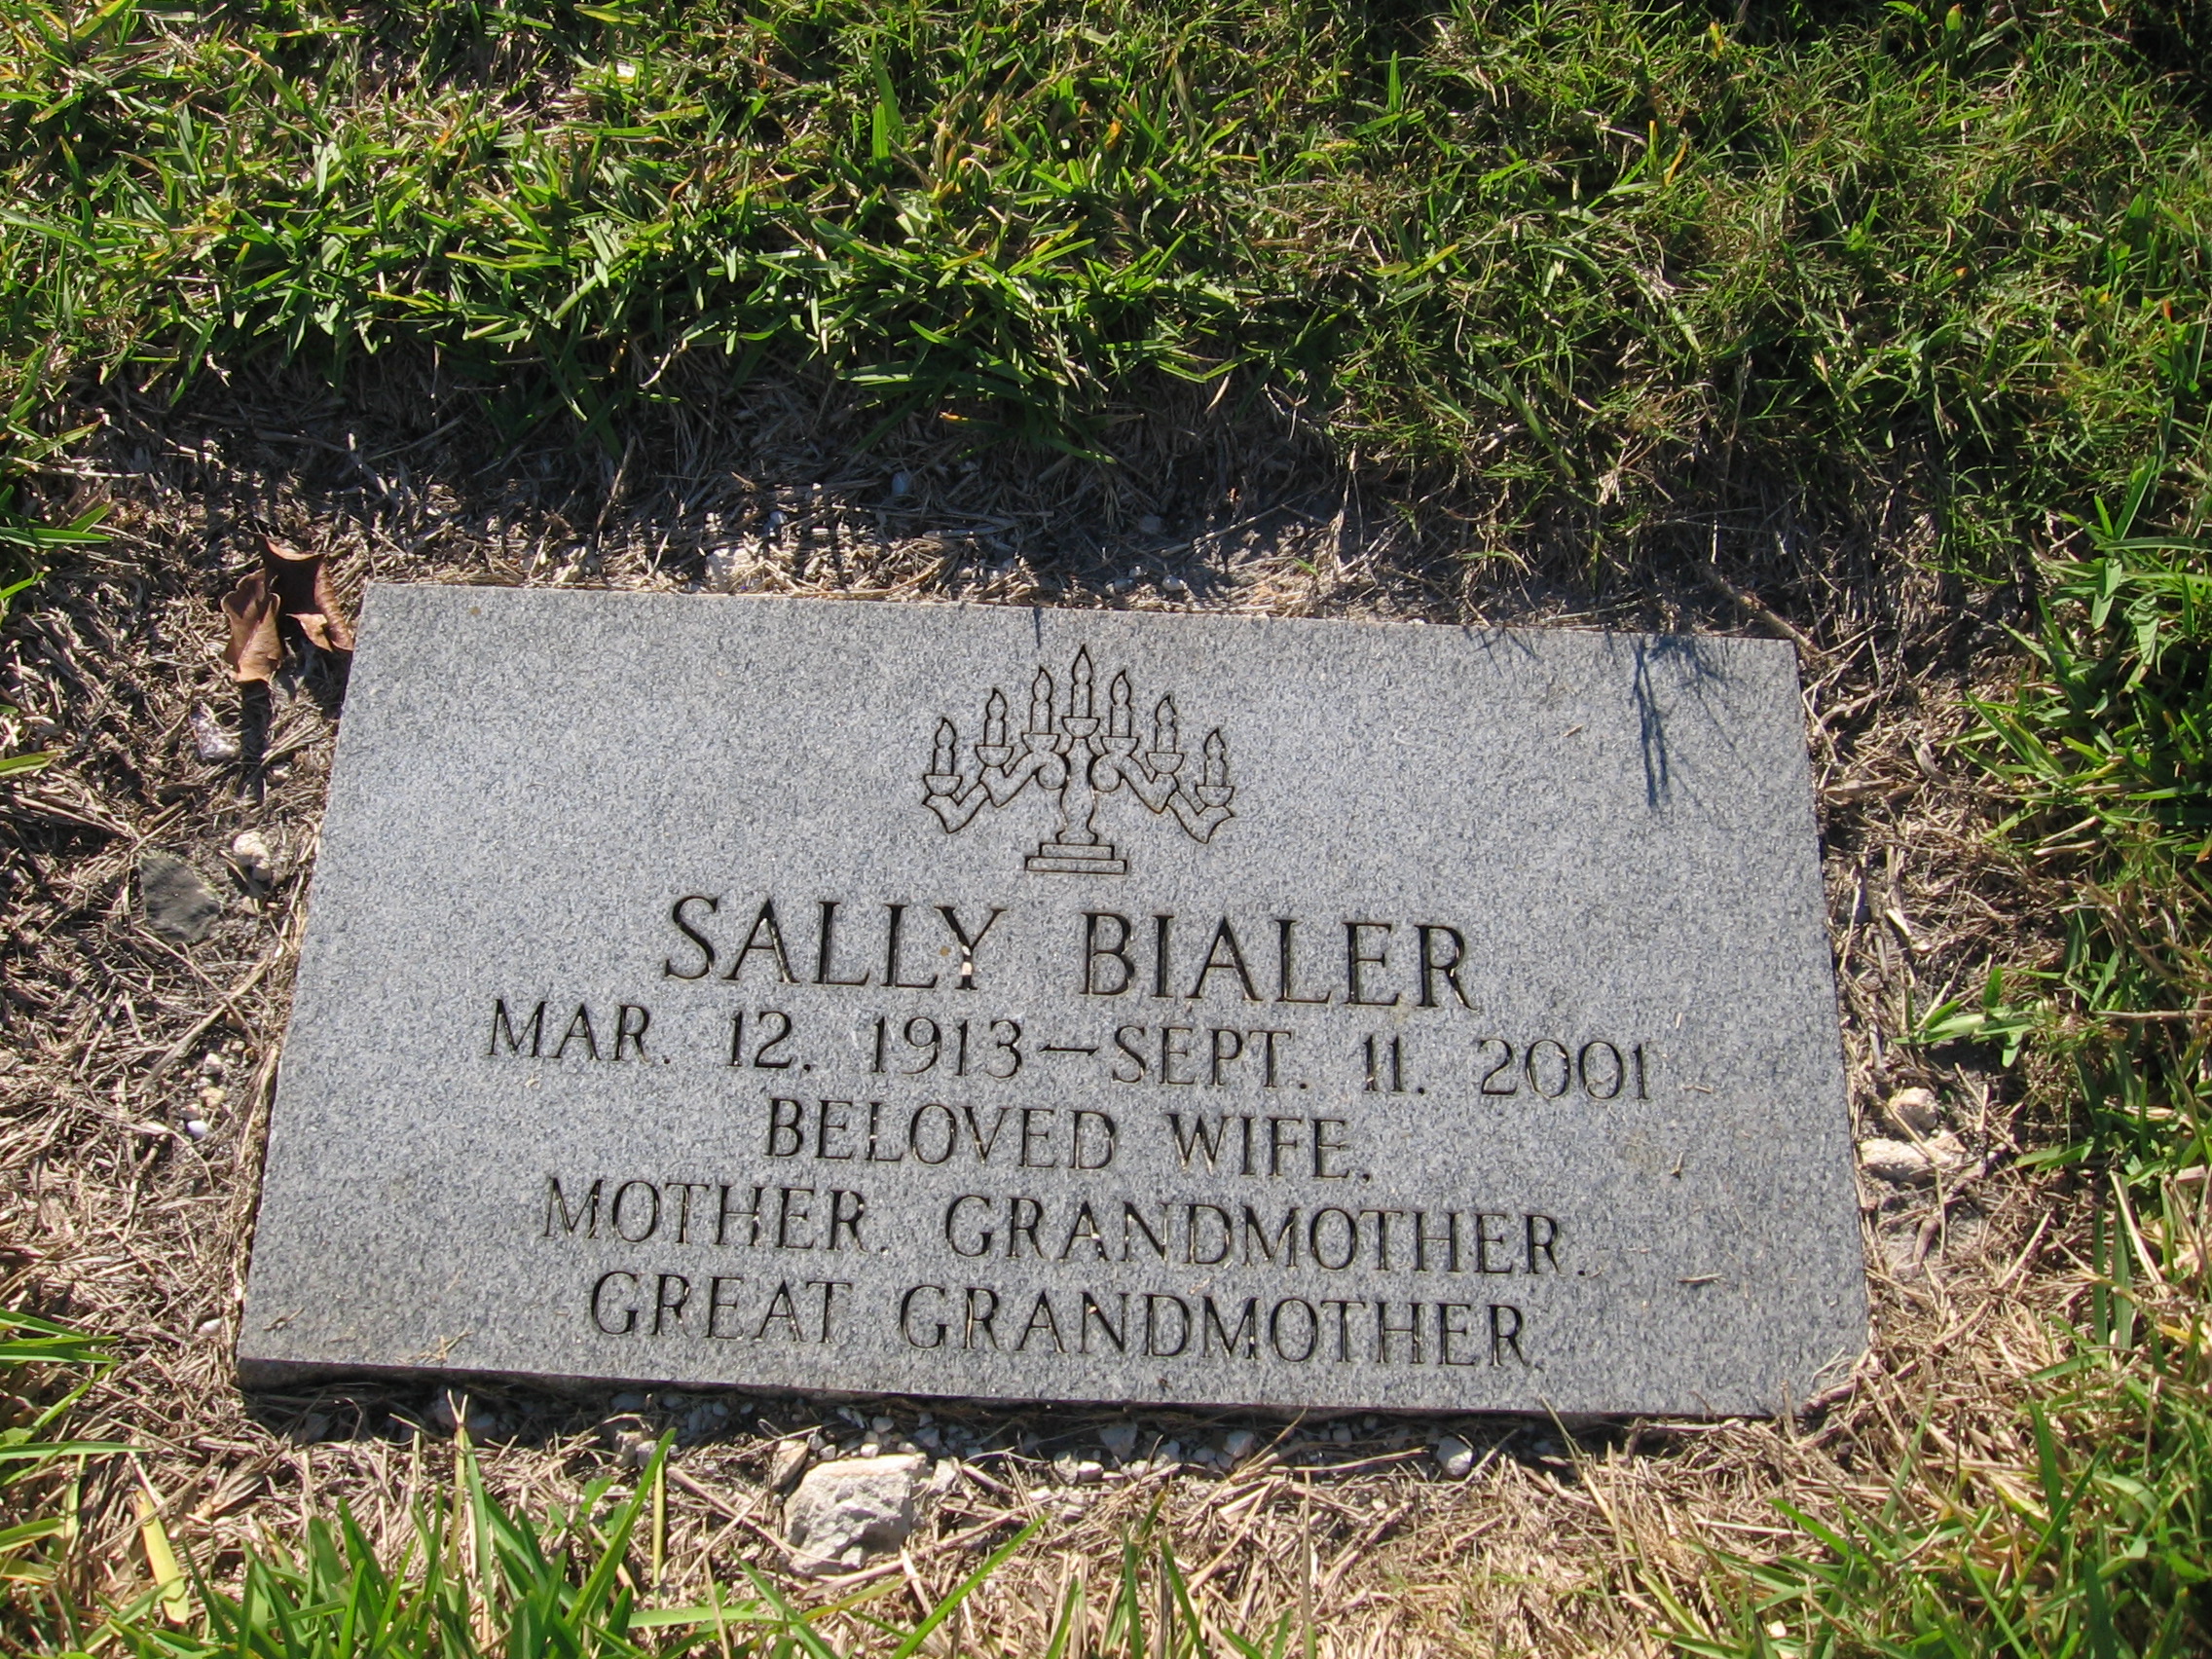 Sally Bialer